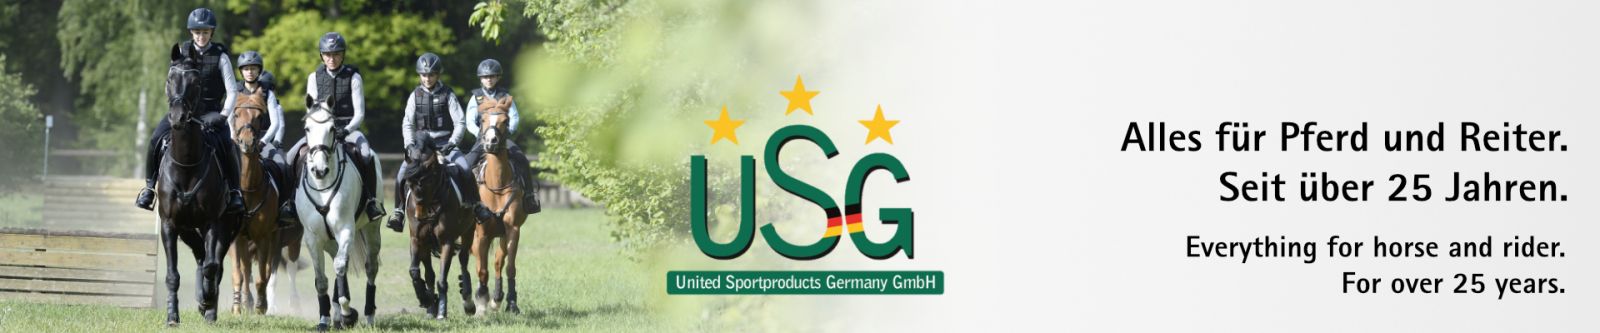 FAQ - Help Me - USG - United Sportproducts Germany GmbH